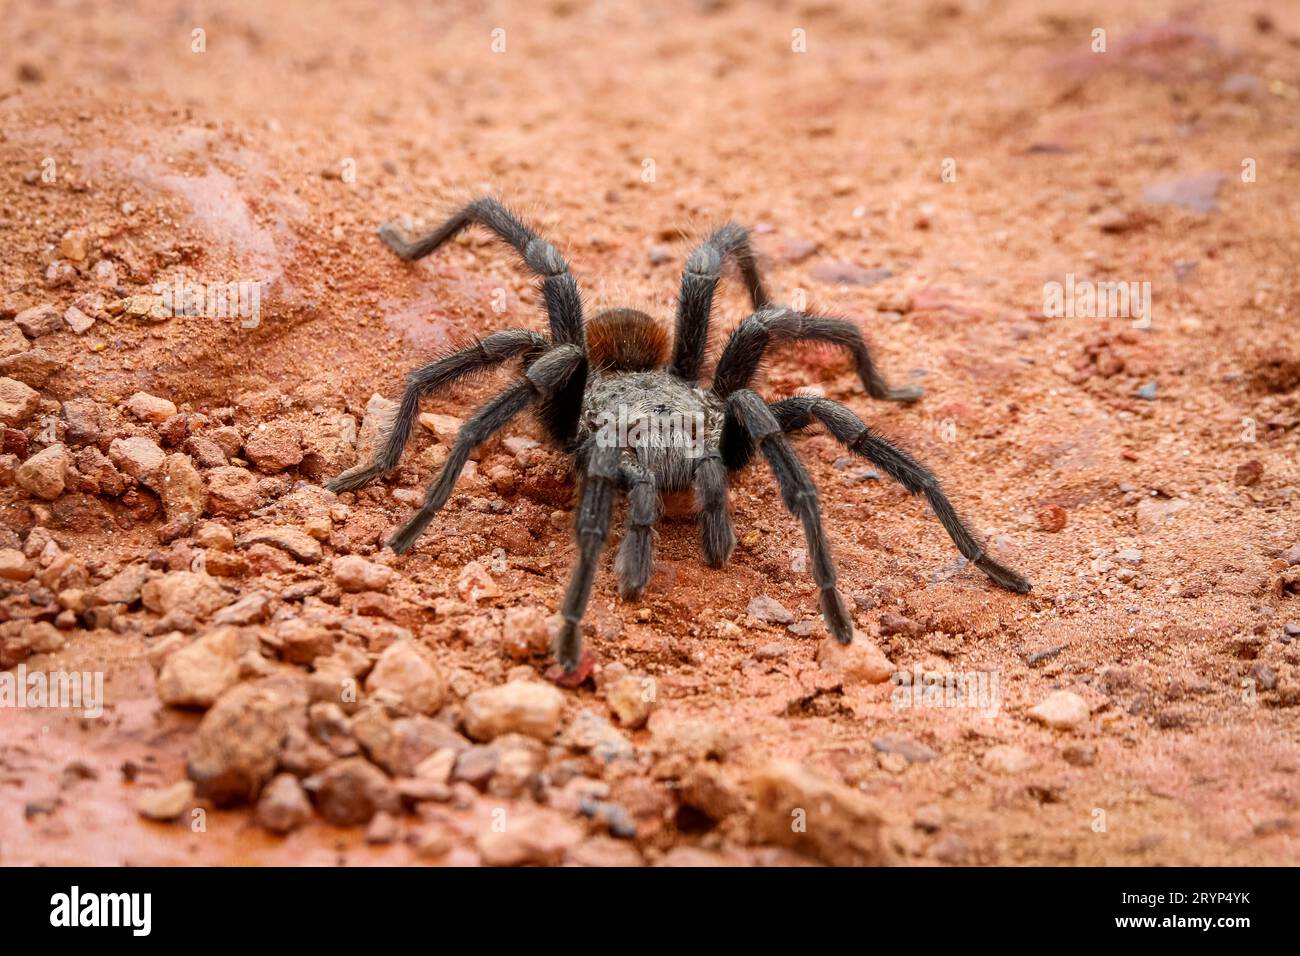 Close-up of a Tarantula on red sand, Biribiri State Park, Minas Gerais, Brazil Stock Photo